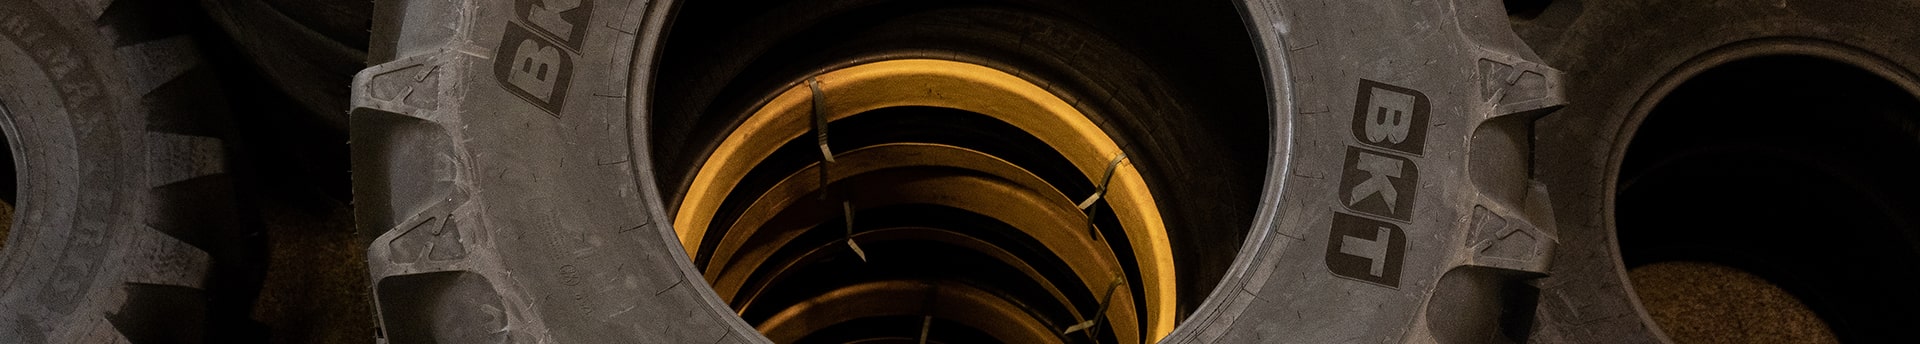 Closeup af dæk